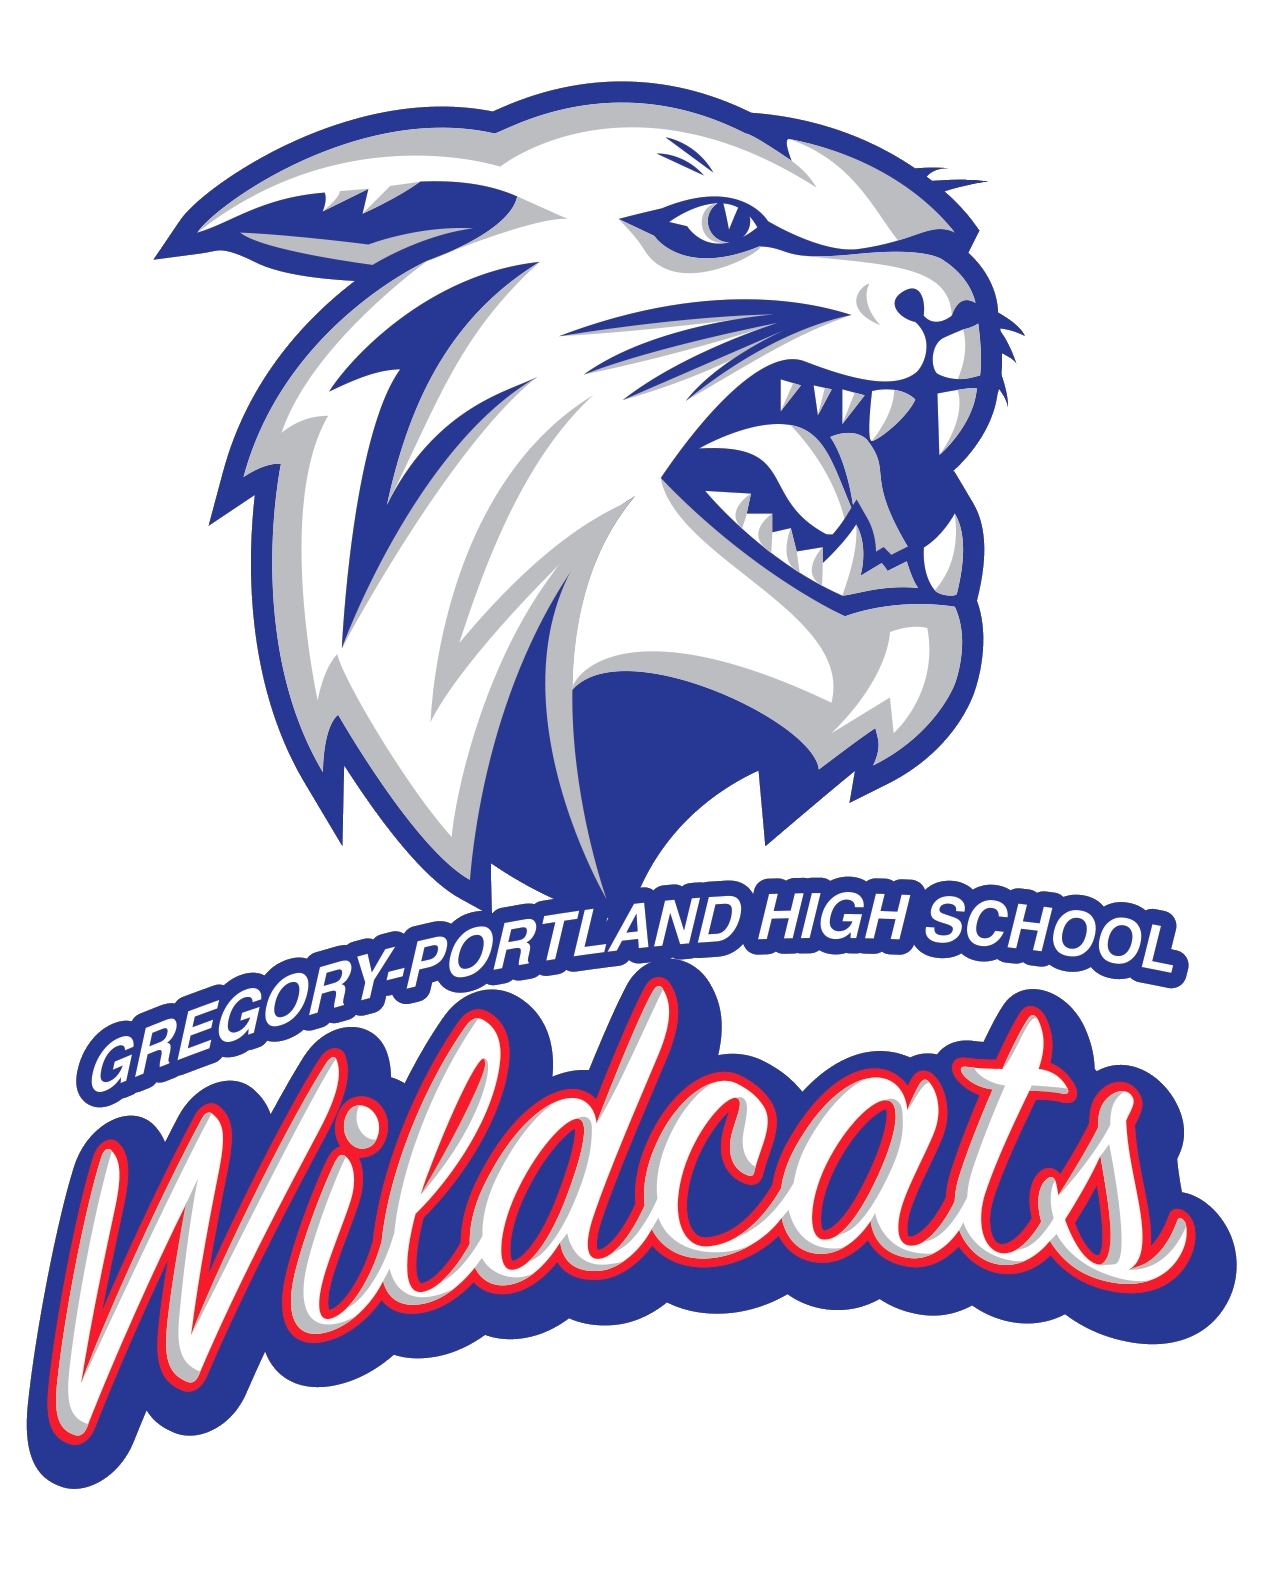 Wildcat clipart blue. The gregory portland wildcats